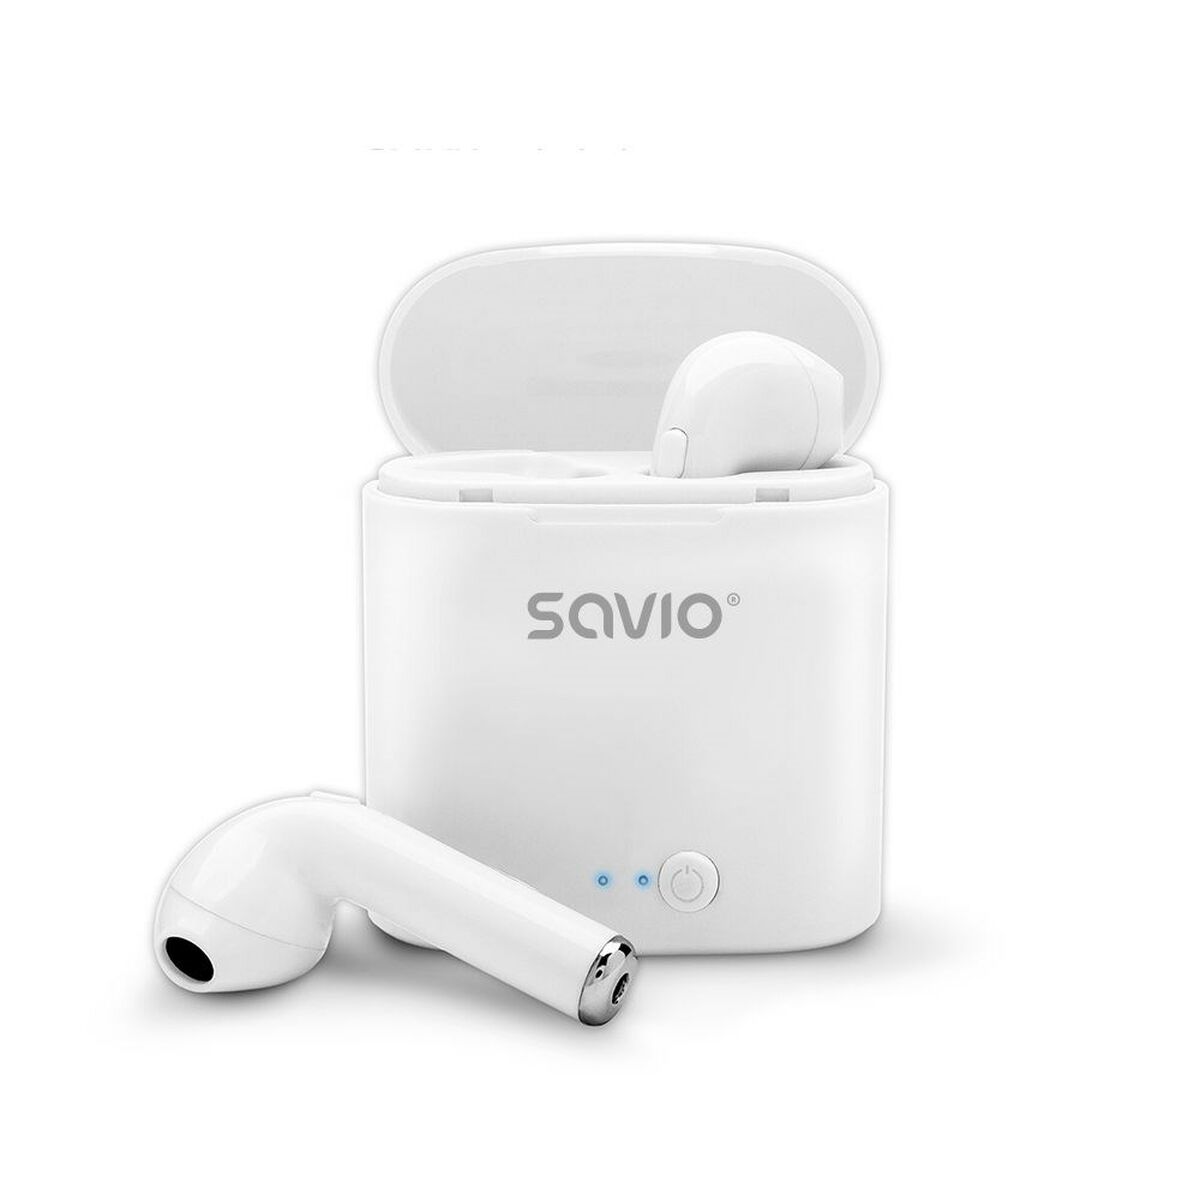 Auricolari in Ear Bluetooth Savio TWS-01 Bianco